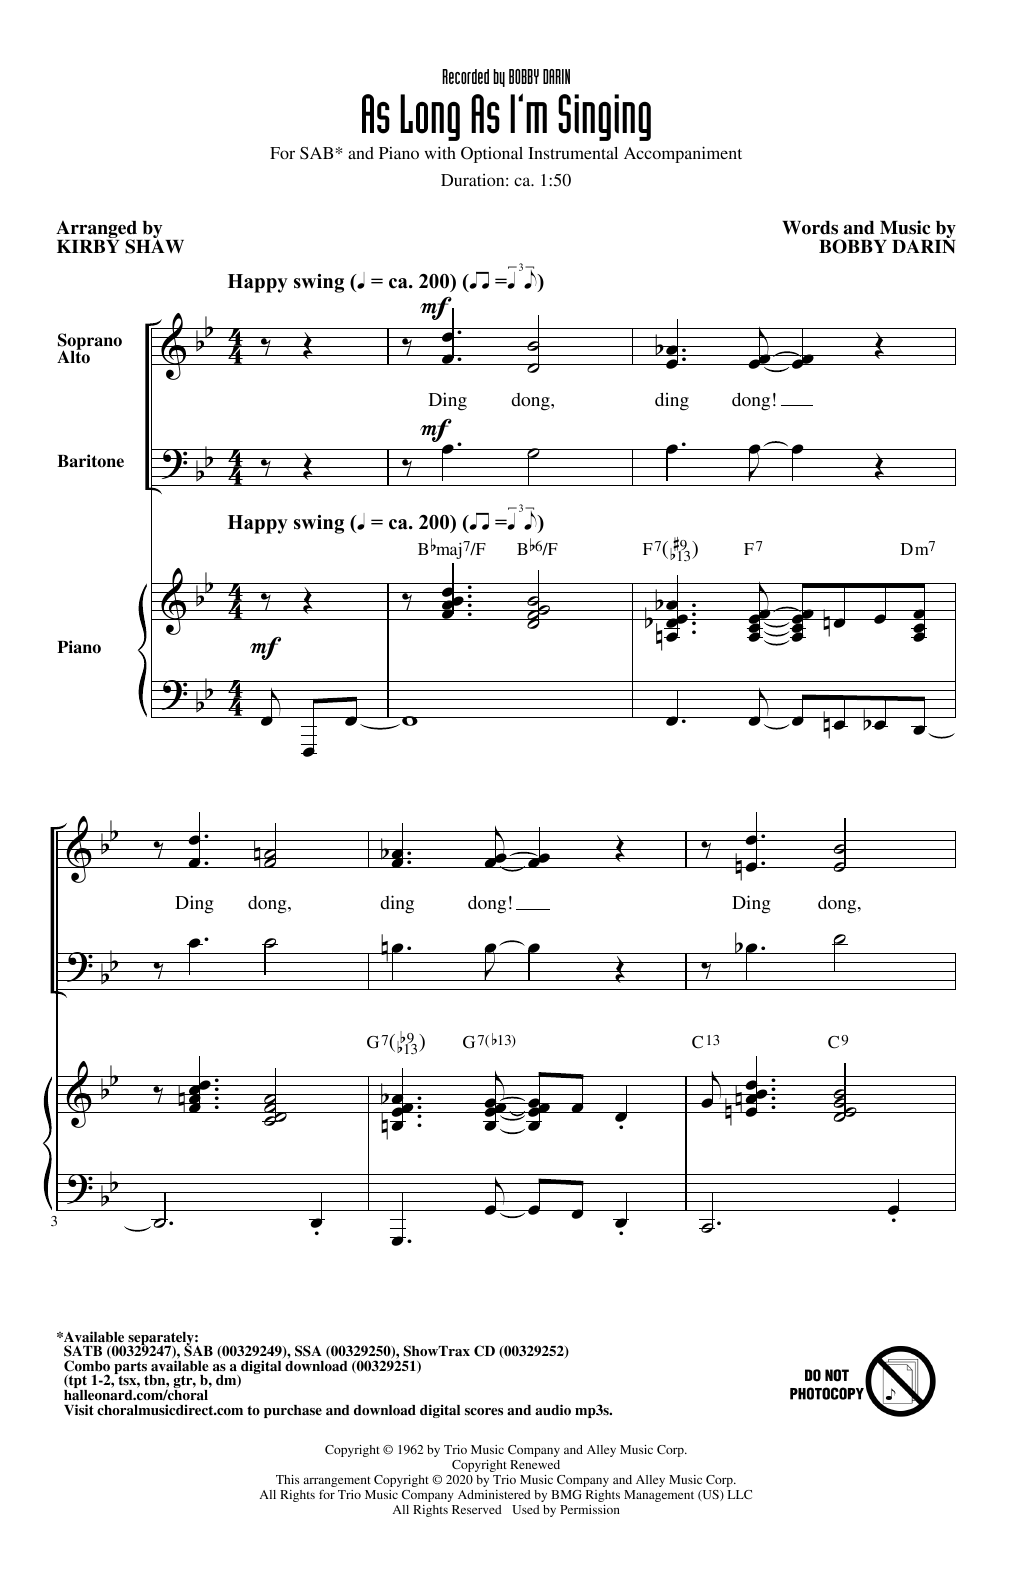 Bobby Darin As Long As I'm Singing (arr. Kirby Shaw) Sheet Music Notes & Chords for SAB Choir - Download or Print PDF